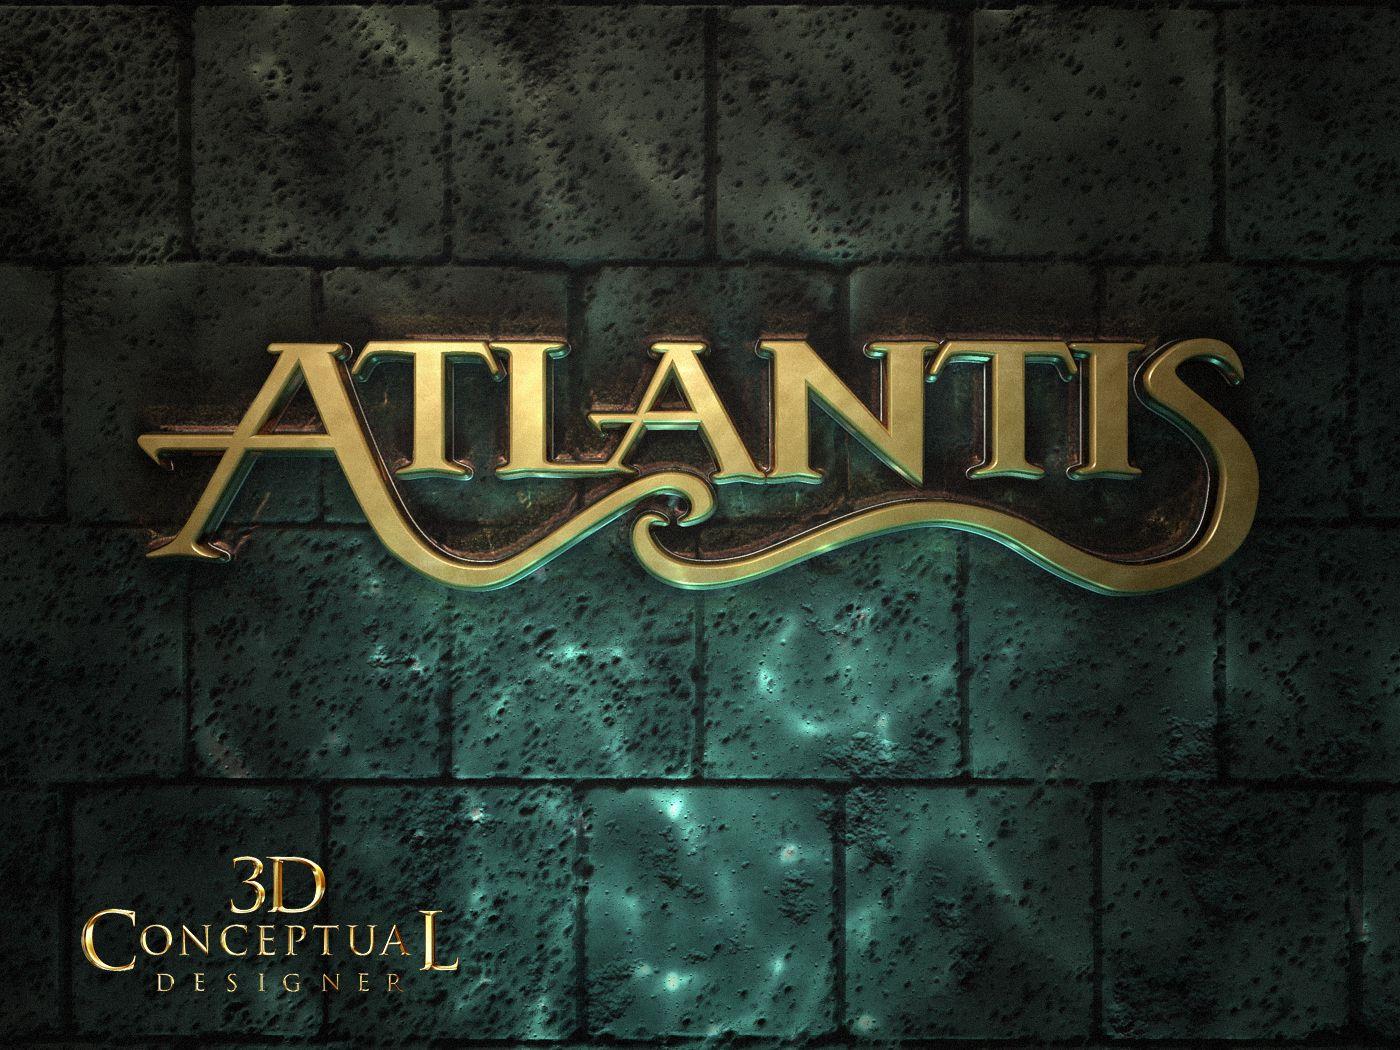 Atlantis Resort Logo - 3DconceptualdesignerBlog: Project Review: The Atlantis Resort 3D ...